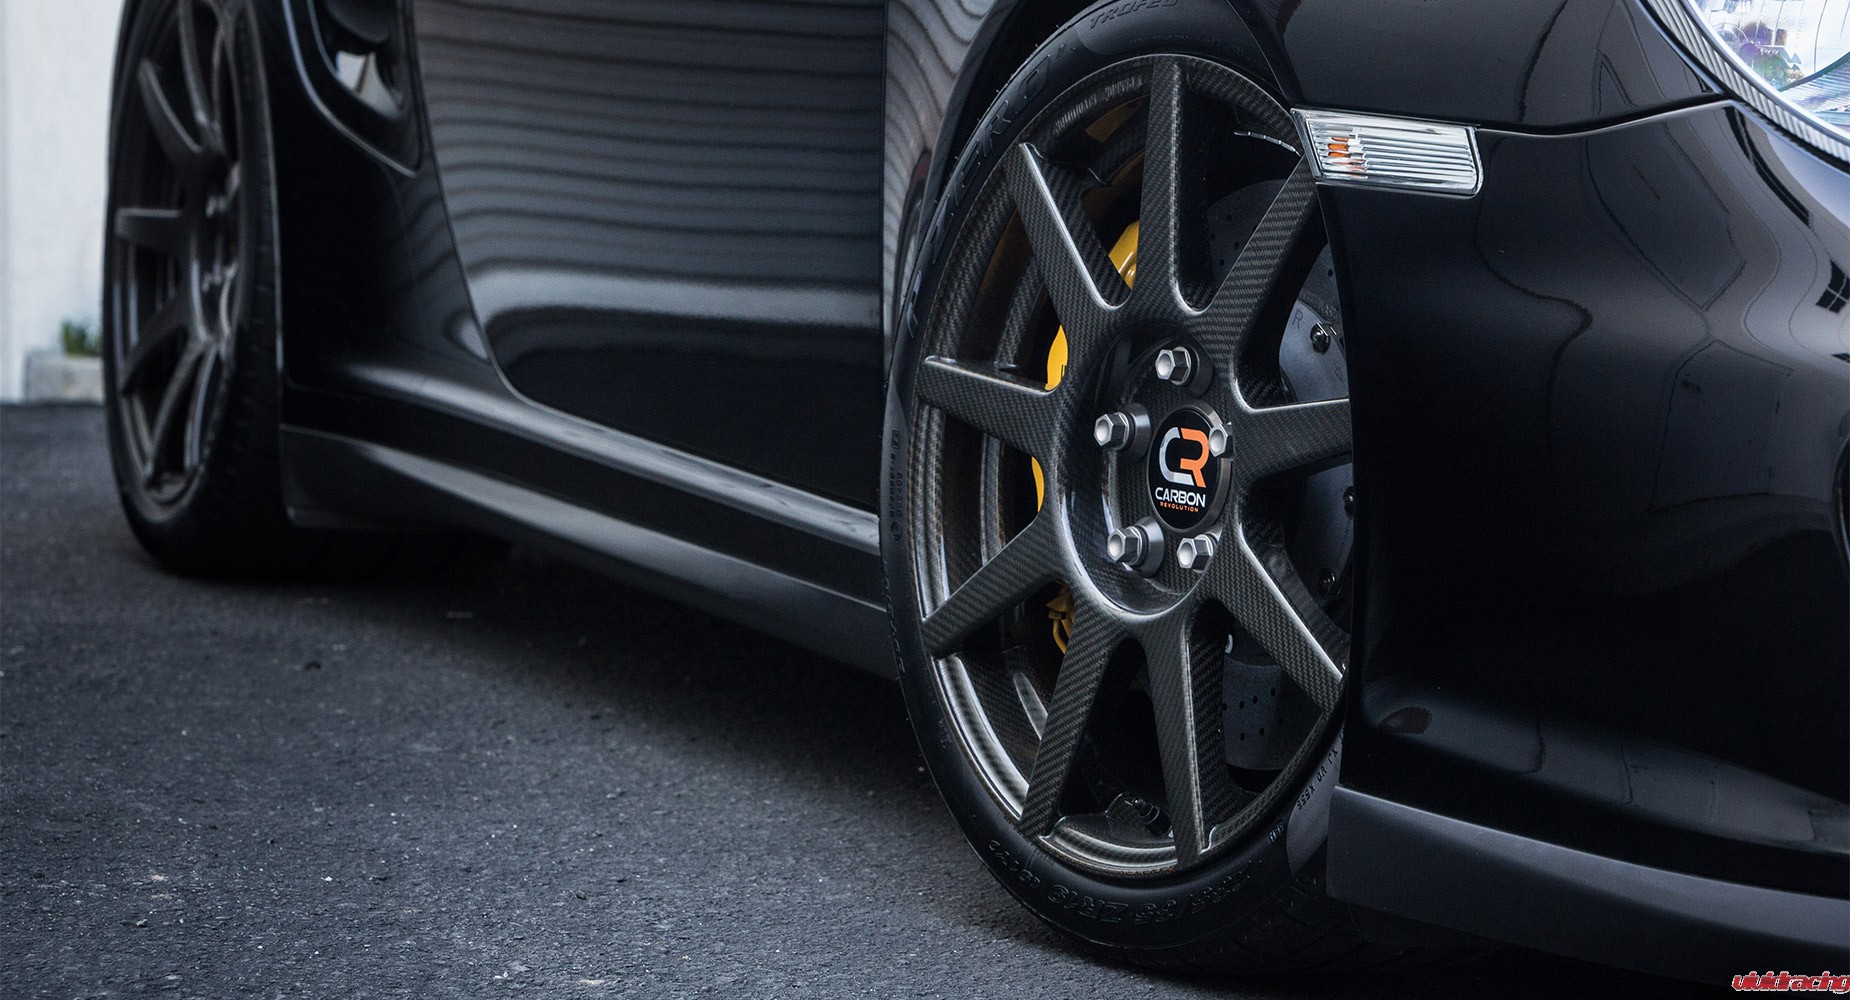 Carbon Revolution CR-9 carbon fiber wheels